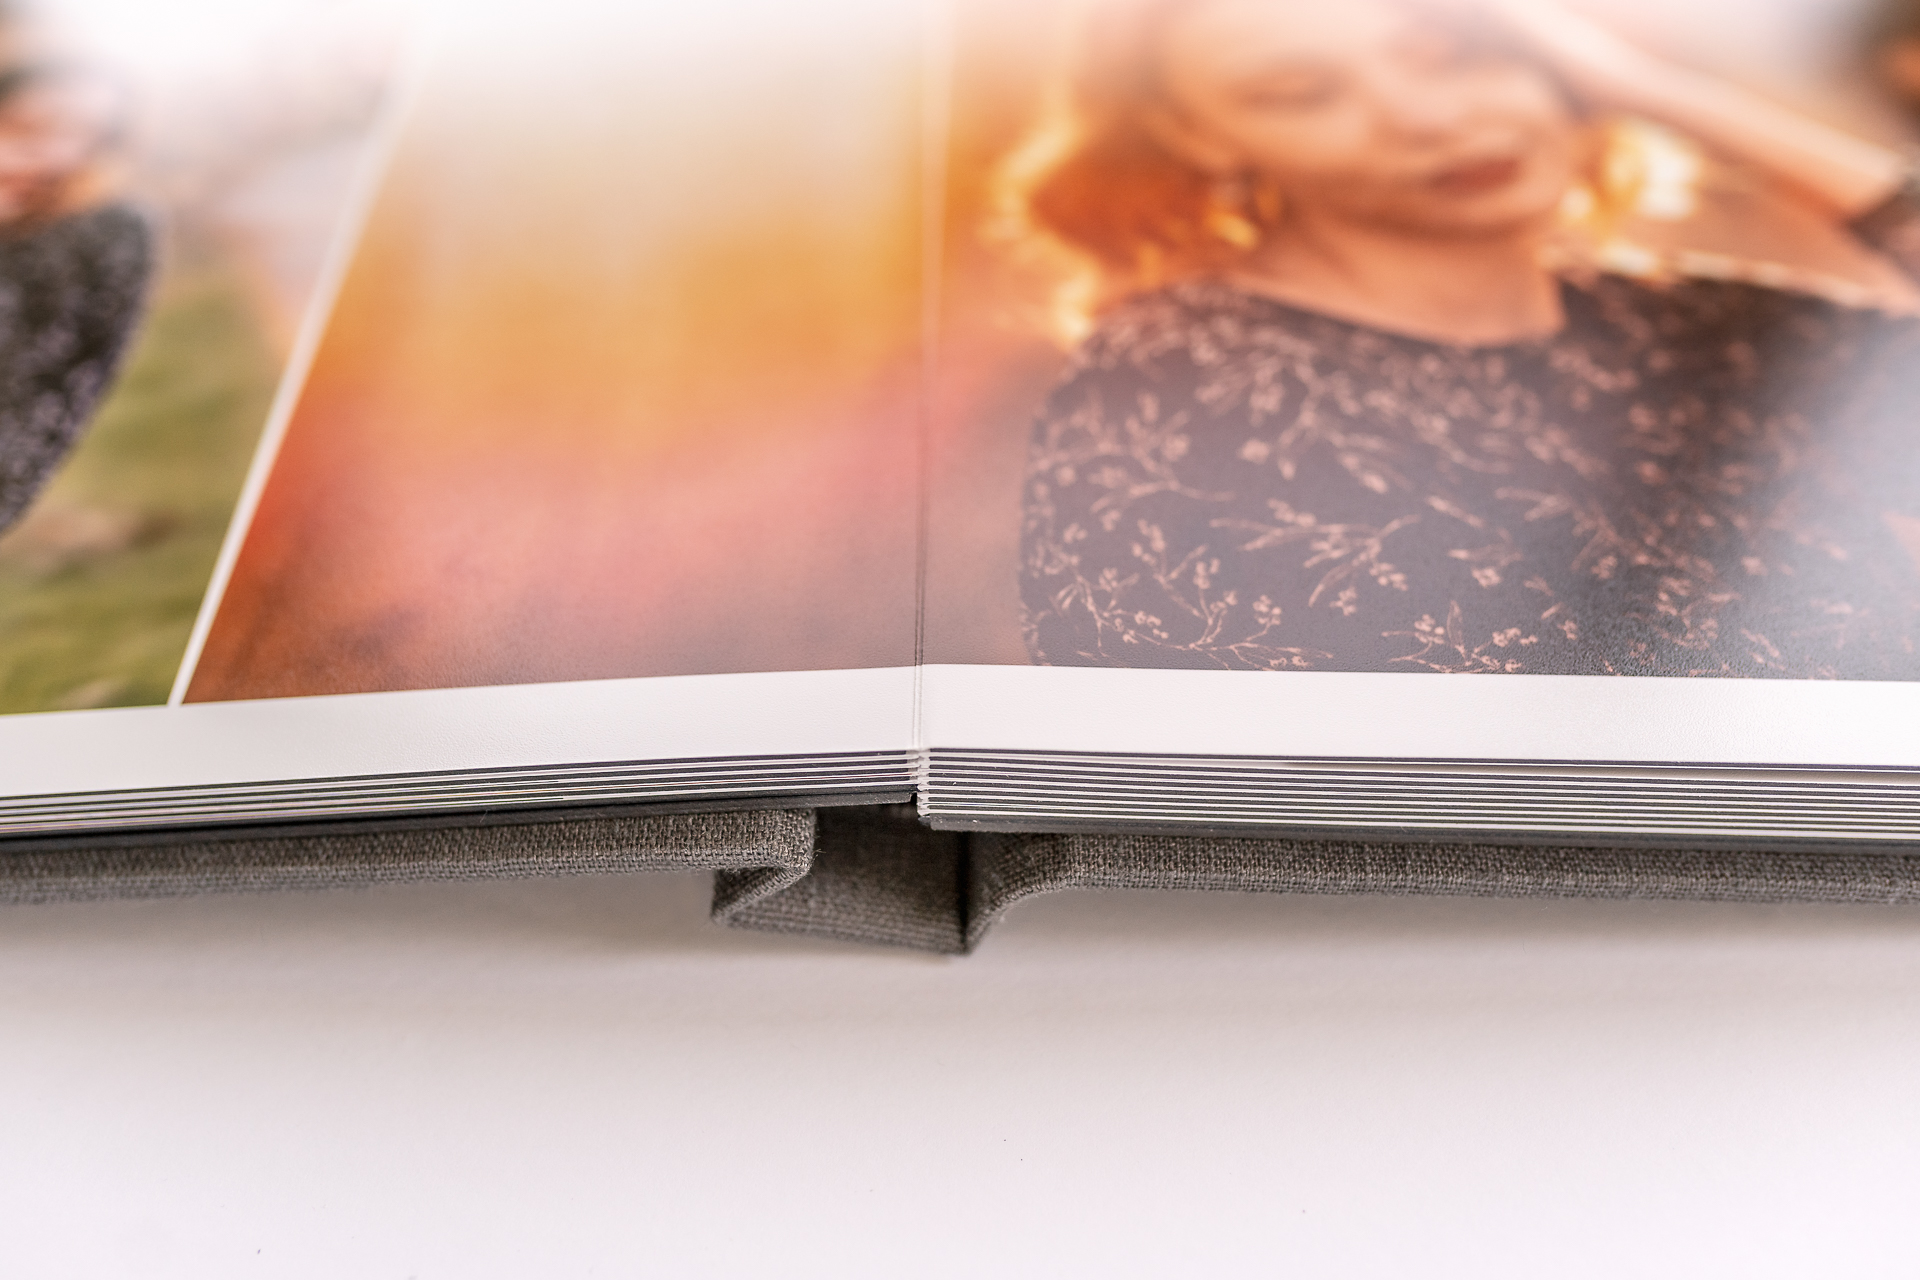 Showcase Your Photos with a Custom Design Layflat Album